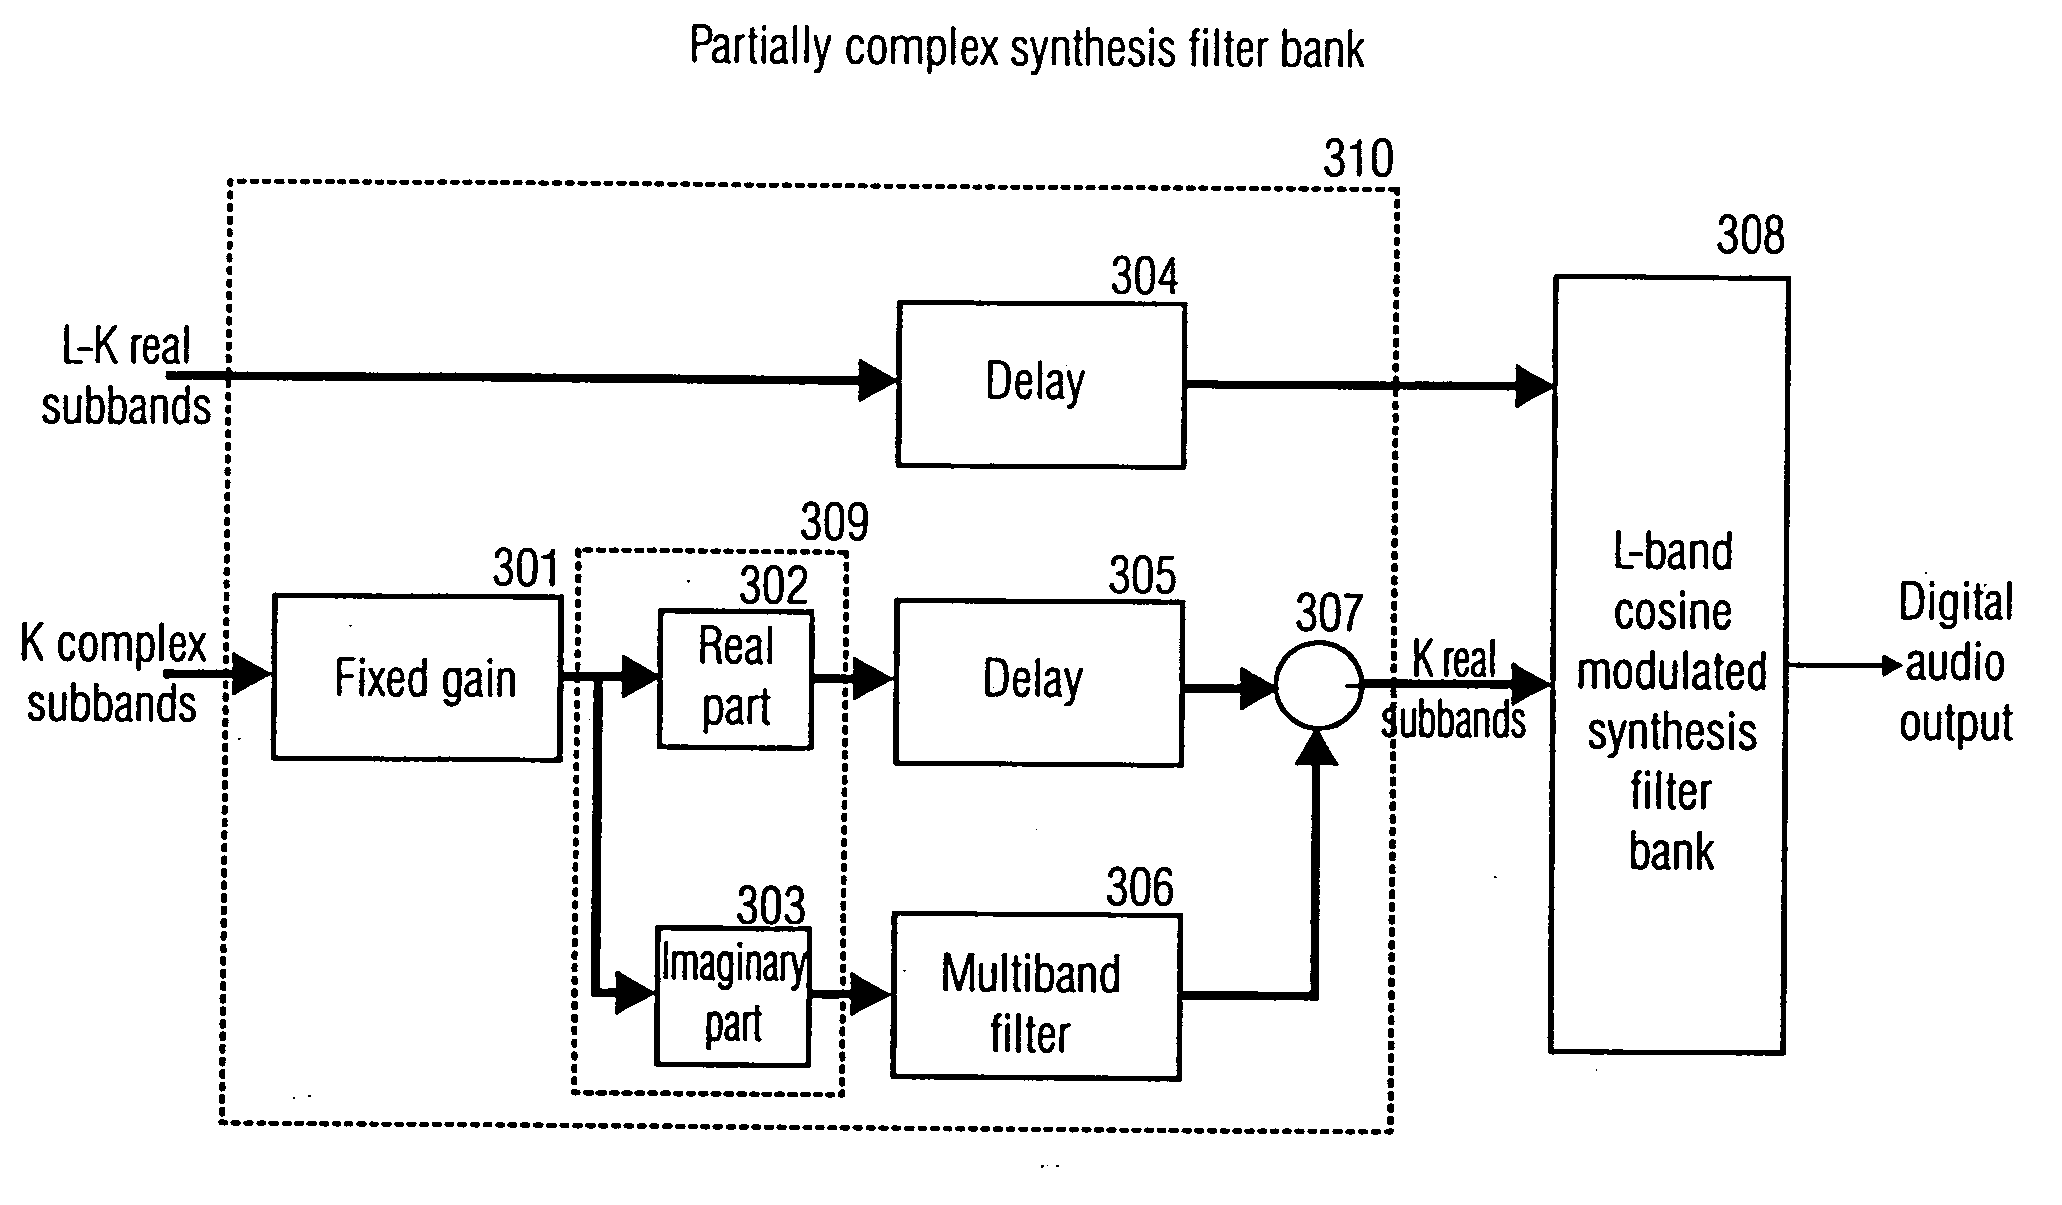 Partially complex modulated filter bank